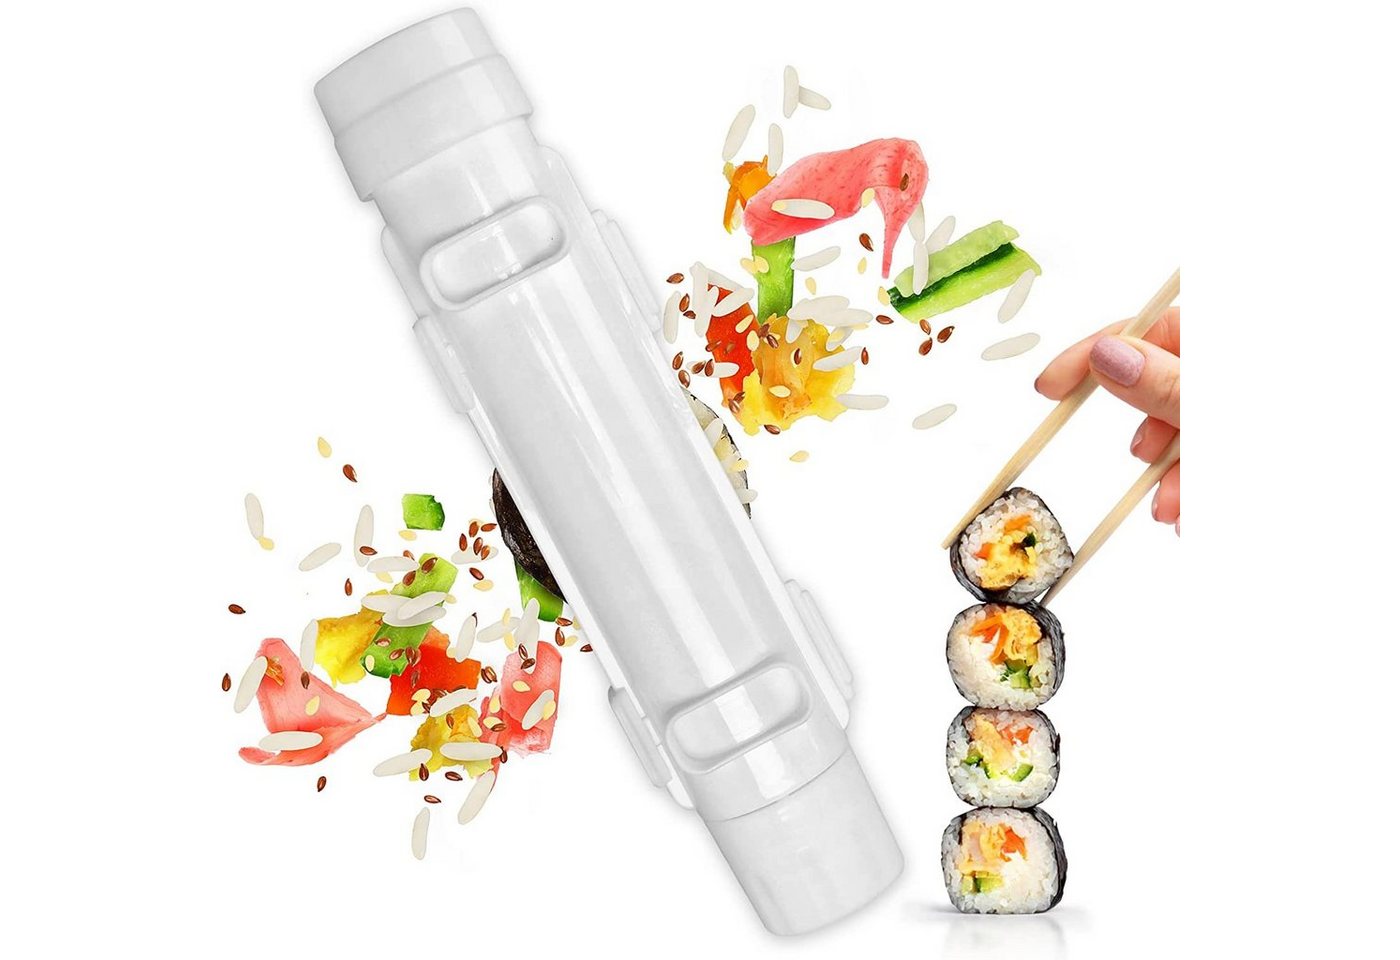 NUODWELL Sushiteller Sushi-DIY-Maschine, Sushi-Bazooka, gemeinsame Zubereitungswerkzeuge von NUODWELL